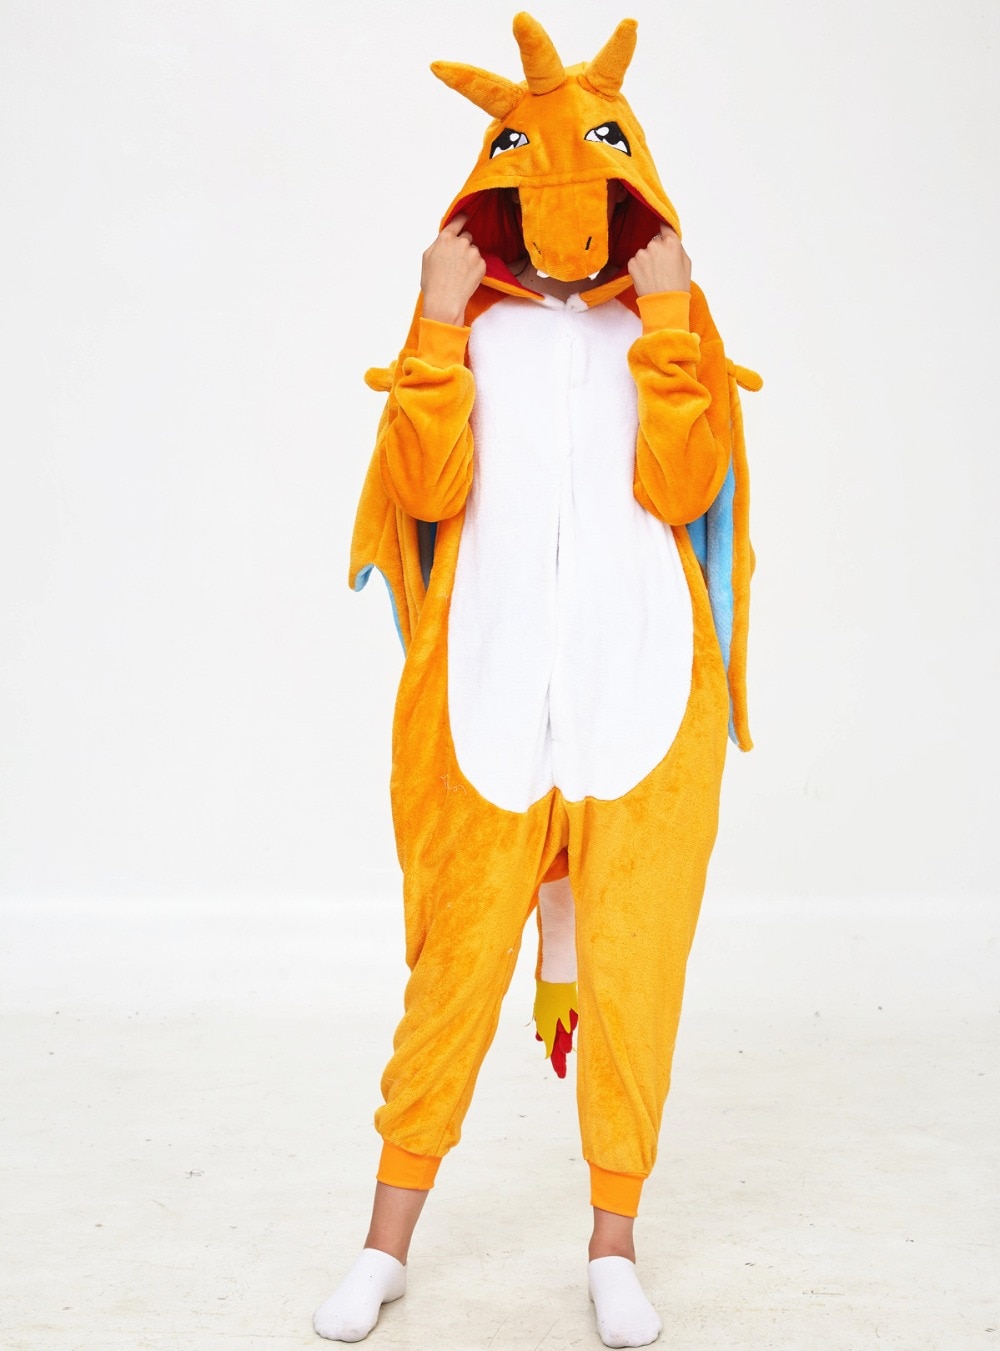 HKSNG Adult Dragon Onesies Kigurumi Pajamas Flannel Halloween Party Oneises Costumes Suit Jumpsuits Pyjamas Hooded